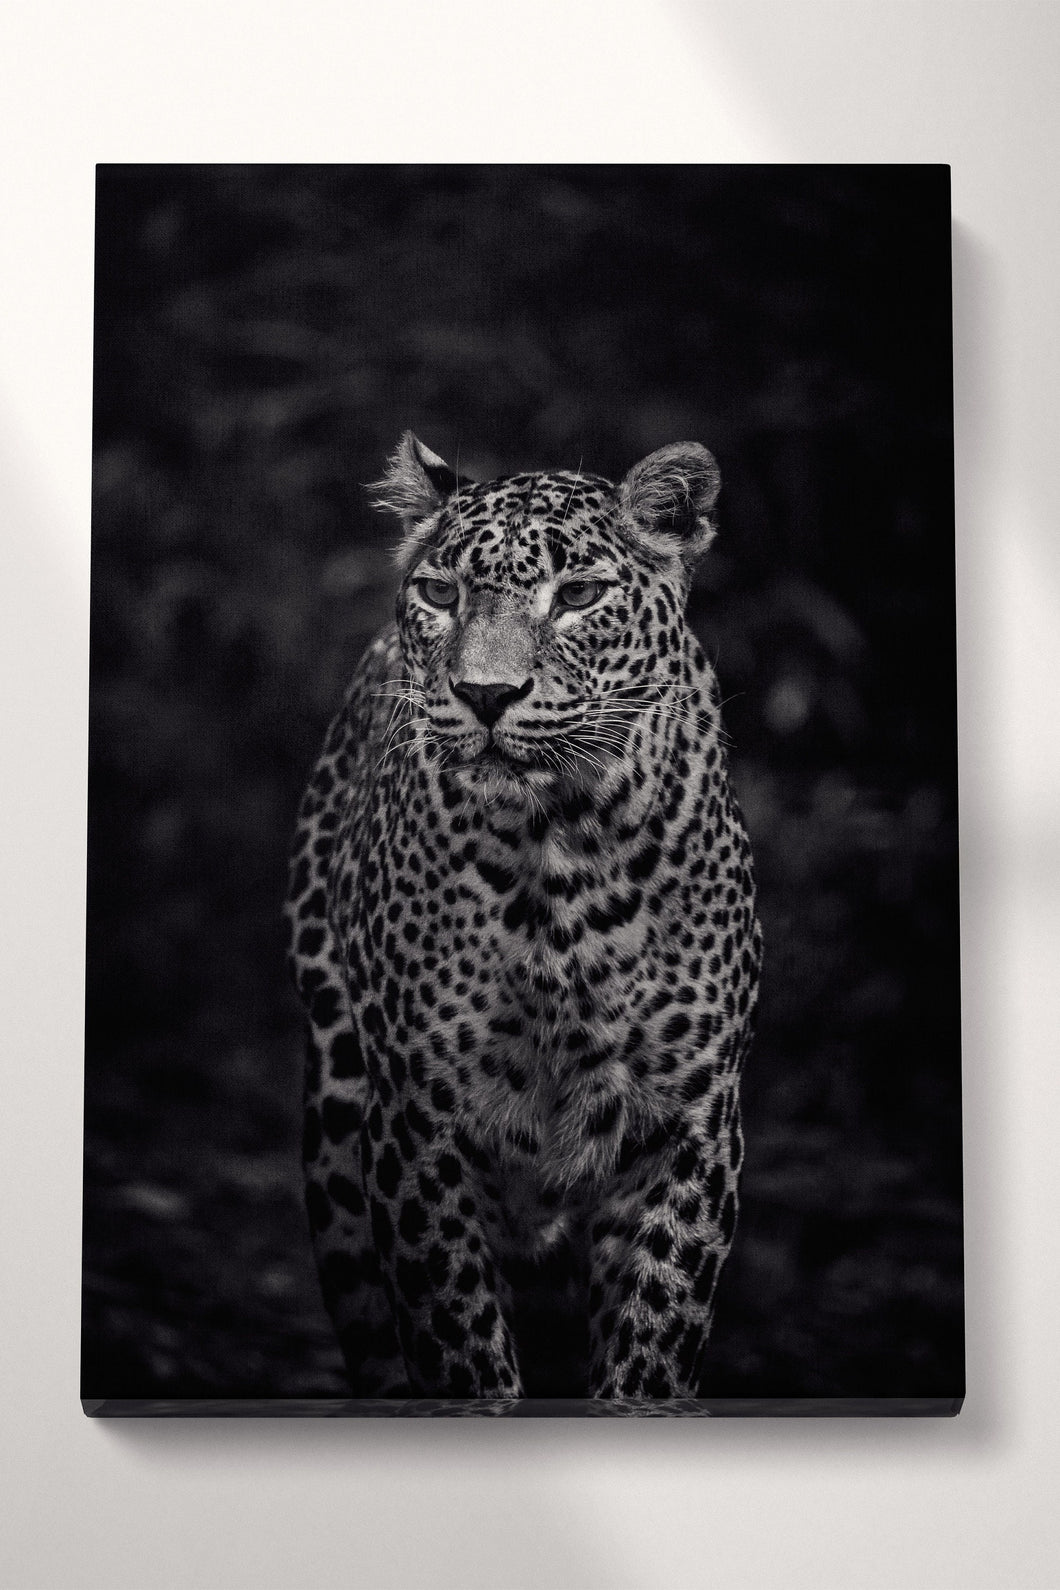 Leopard Black and White Portrait Canvas Wall Art Home Decor Eco Leather Print